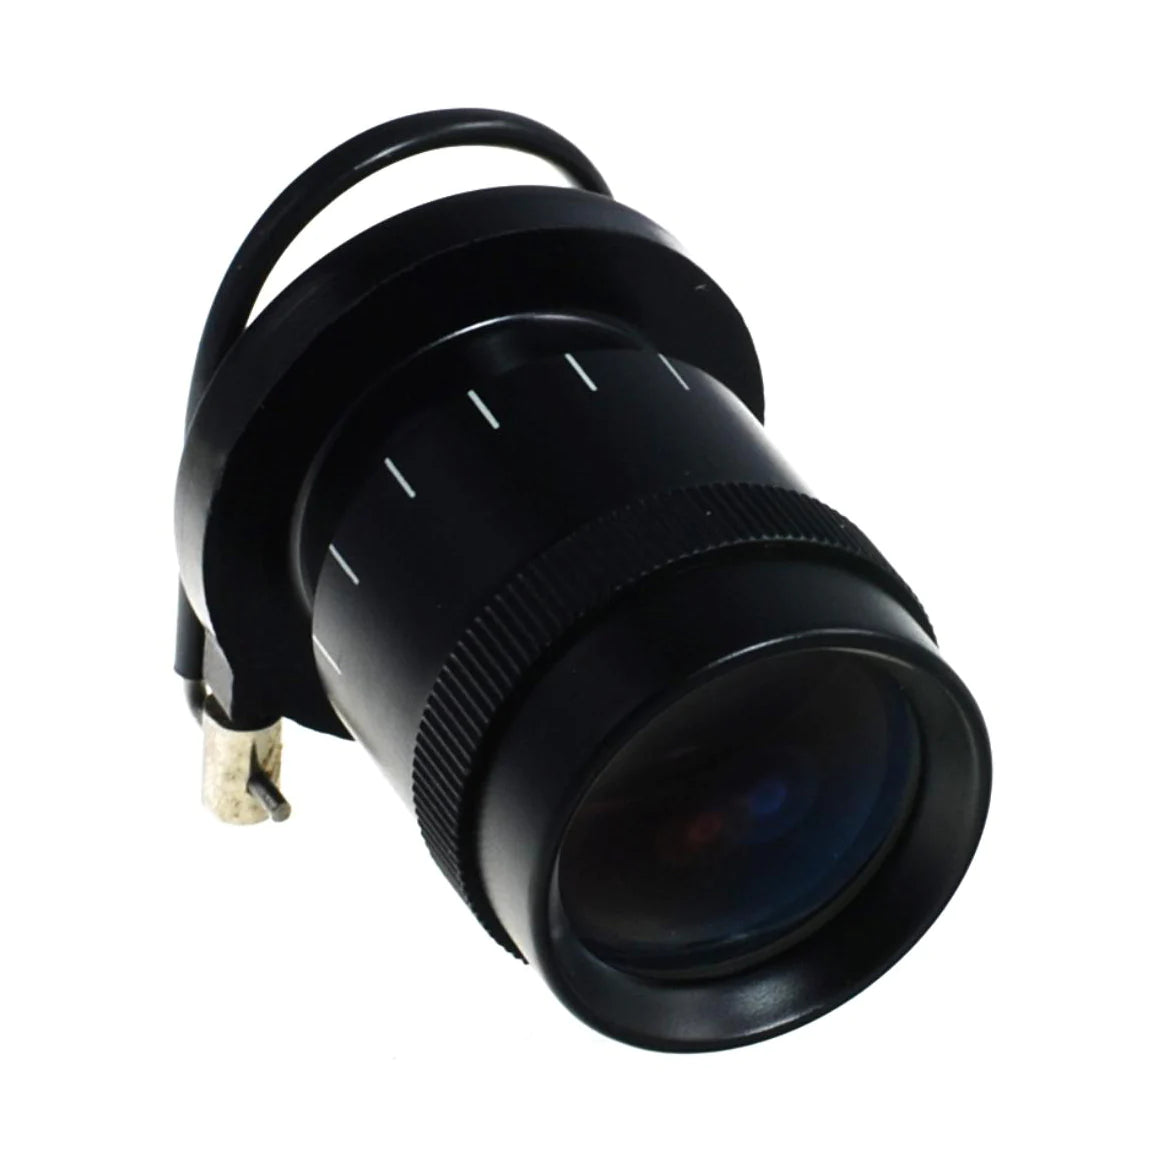 A telescopic device that looks like a lense of a binocular